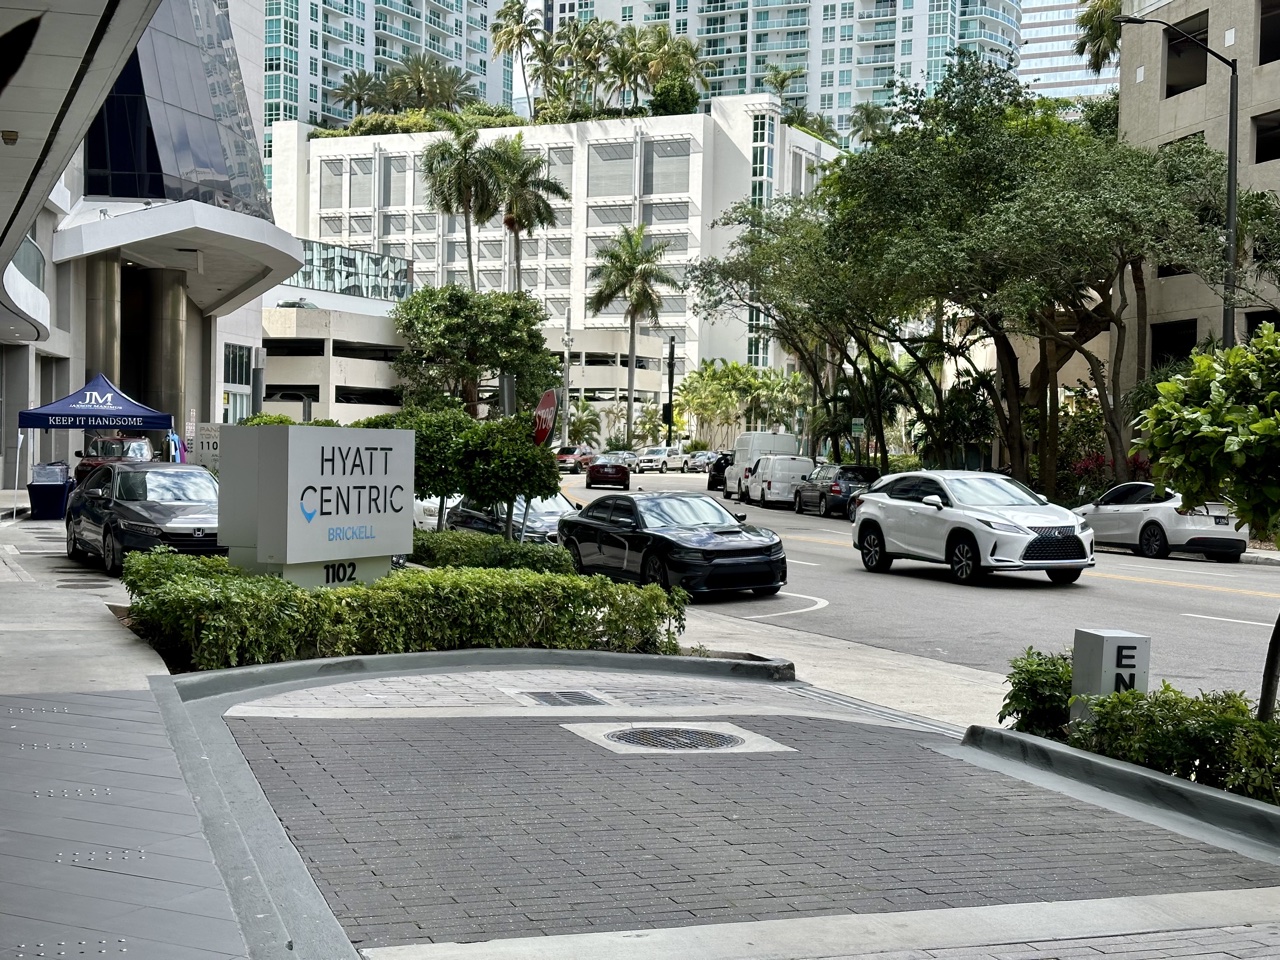 Hyatt Centric Brickell Miami driveway